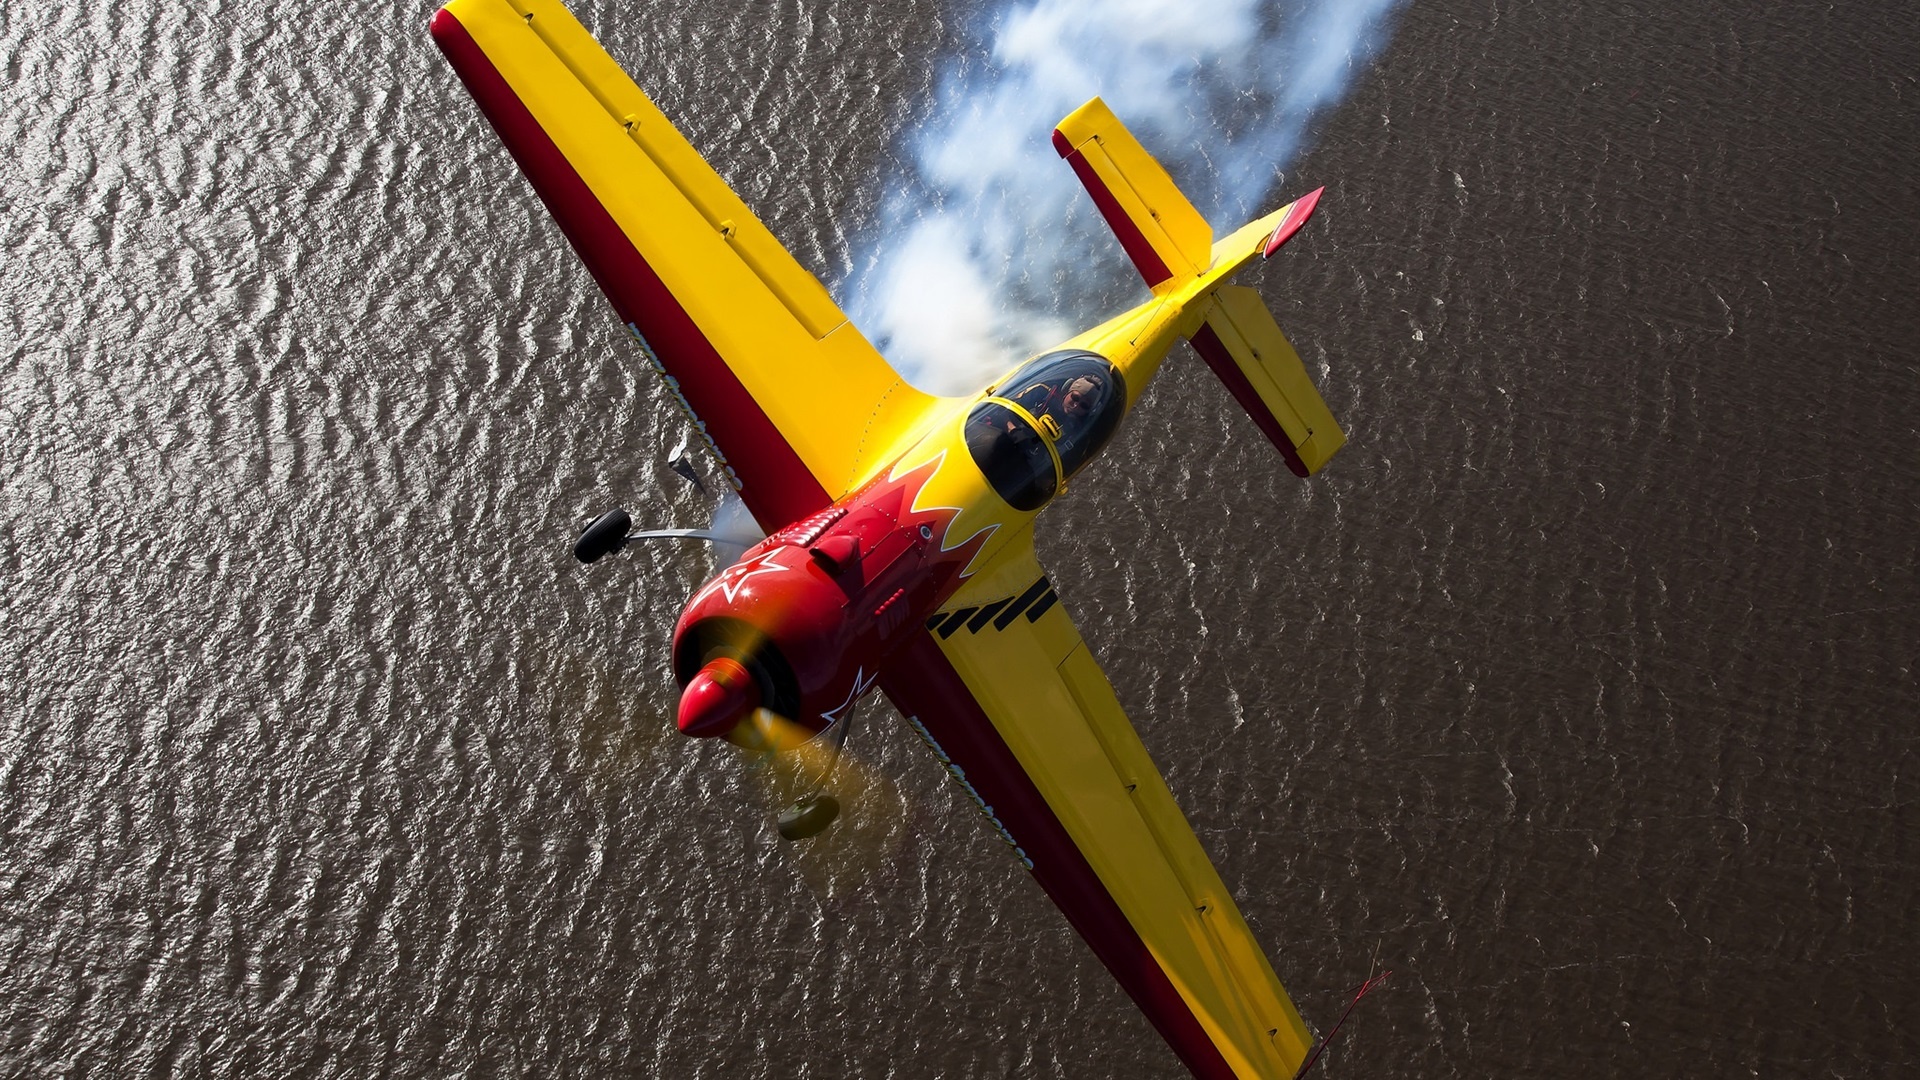 Air Racing: Aerobatics in airplanes motorsport, Extreme adventure sport. 1920x1080 Full HD Wallpaper.